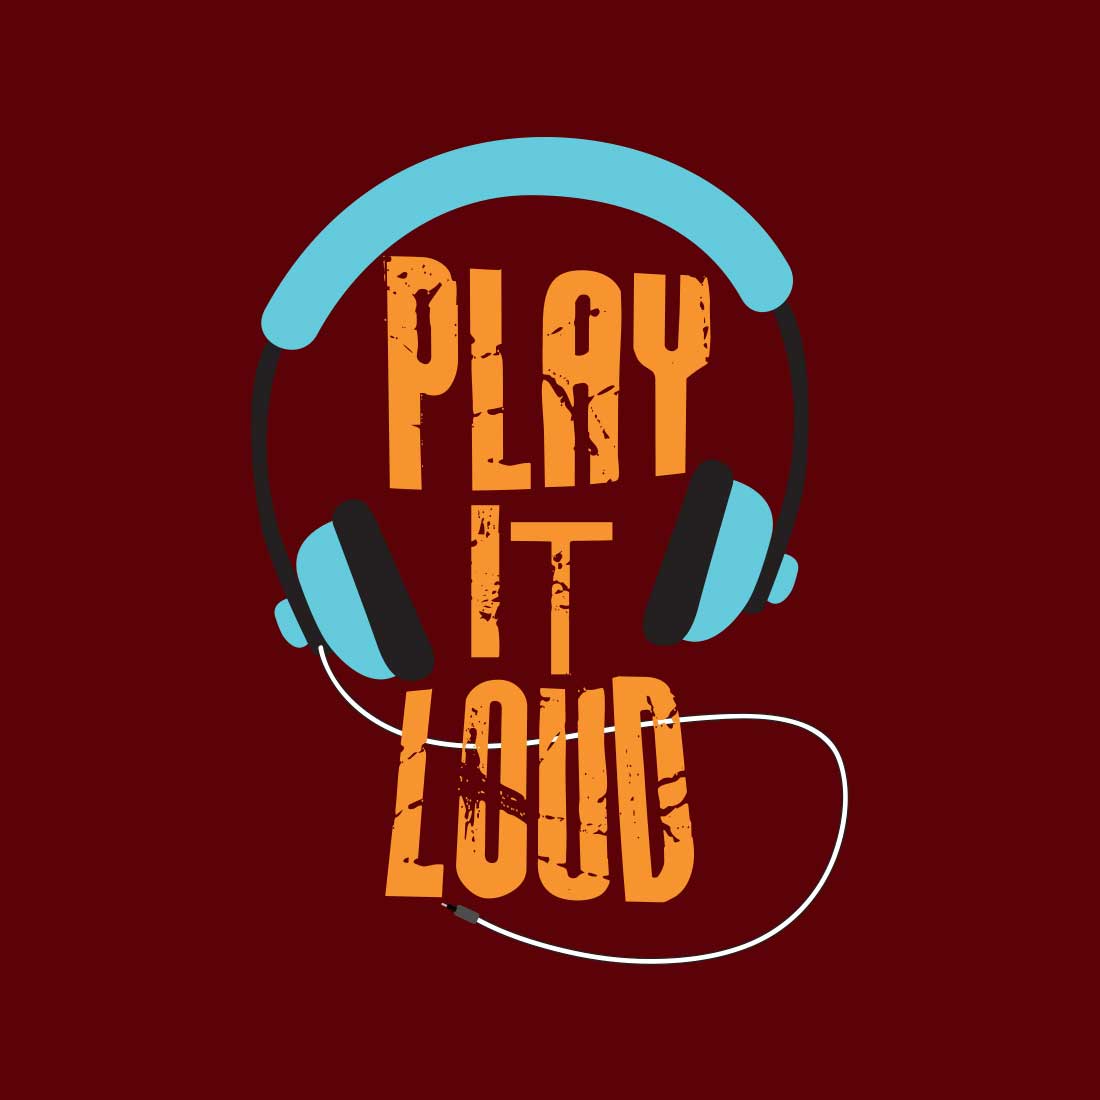 Play It loud Maroon Men T-Shirt